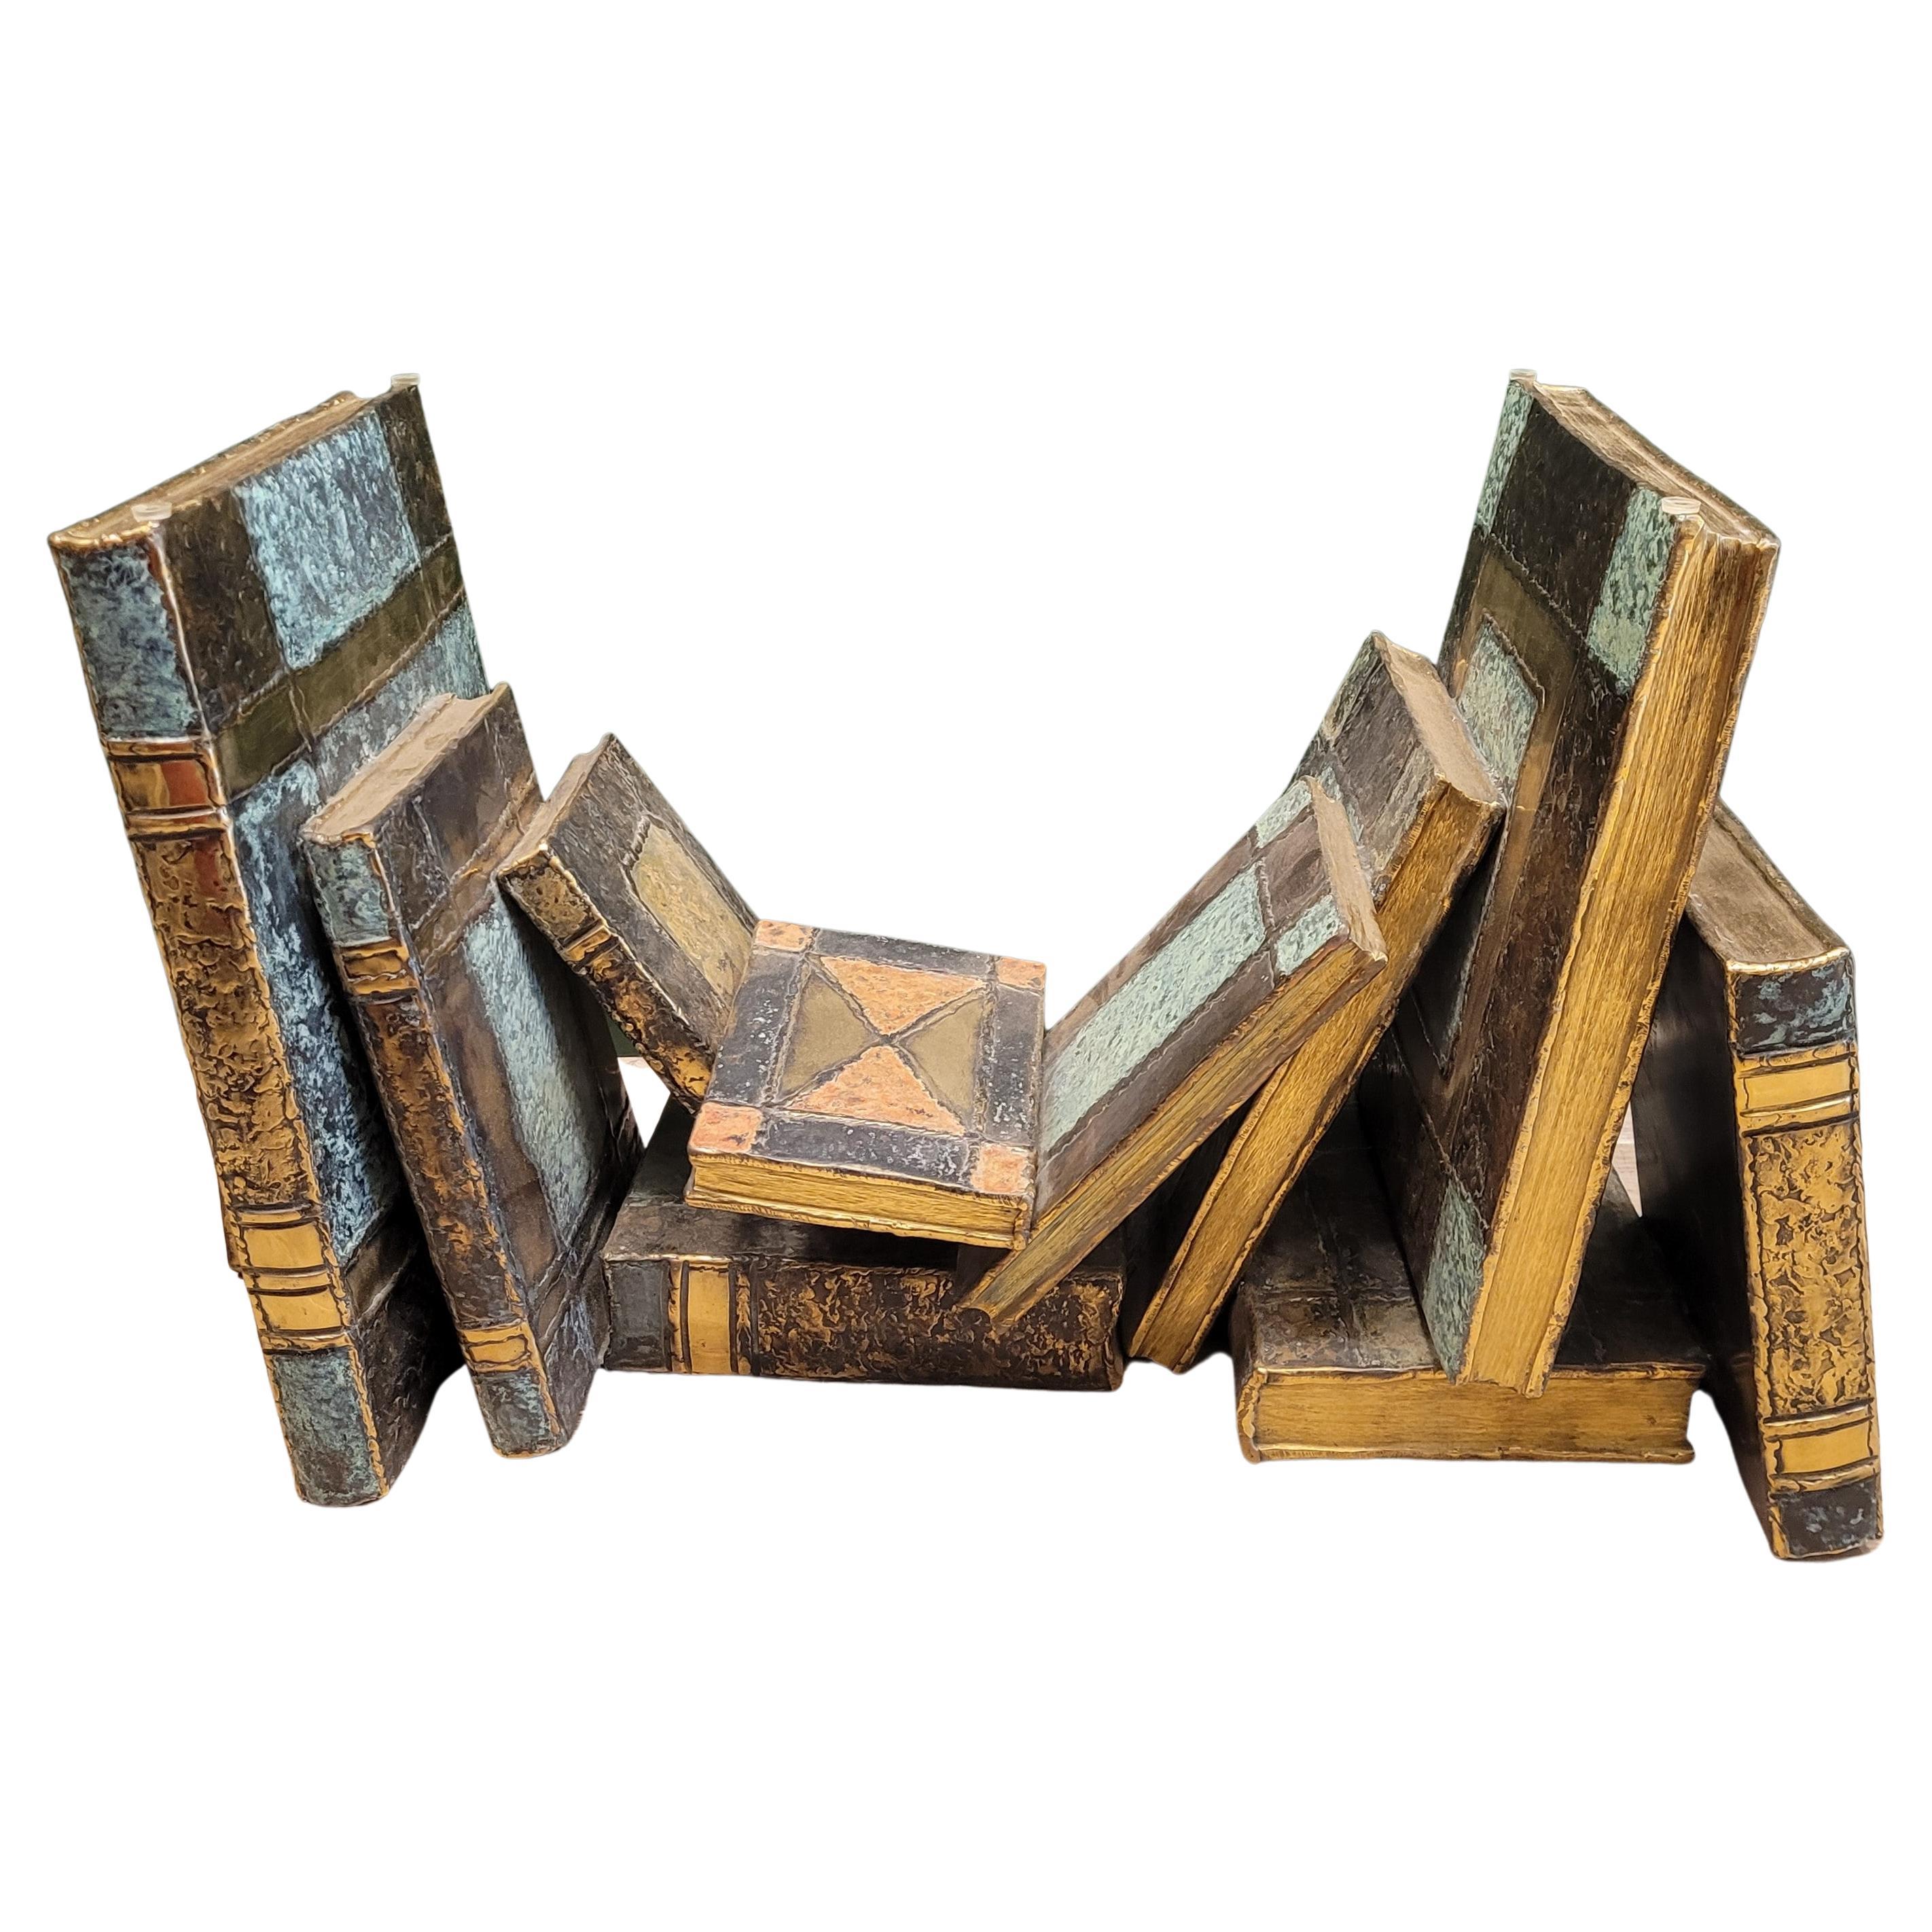 D.Chasain French Bronze books sculpture Coffetable auxiliar table sculpture sign For Sale